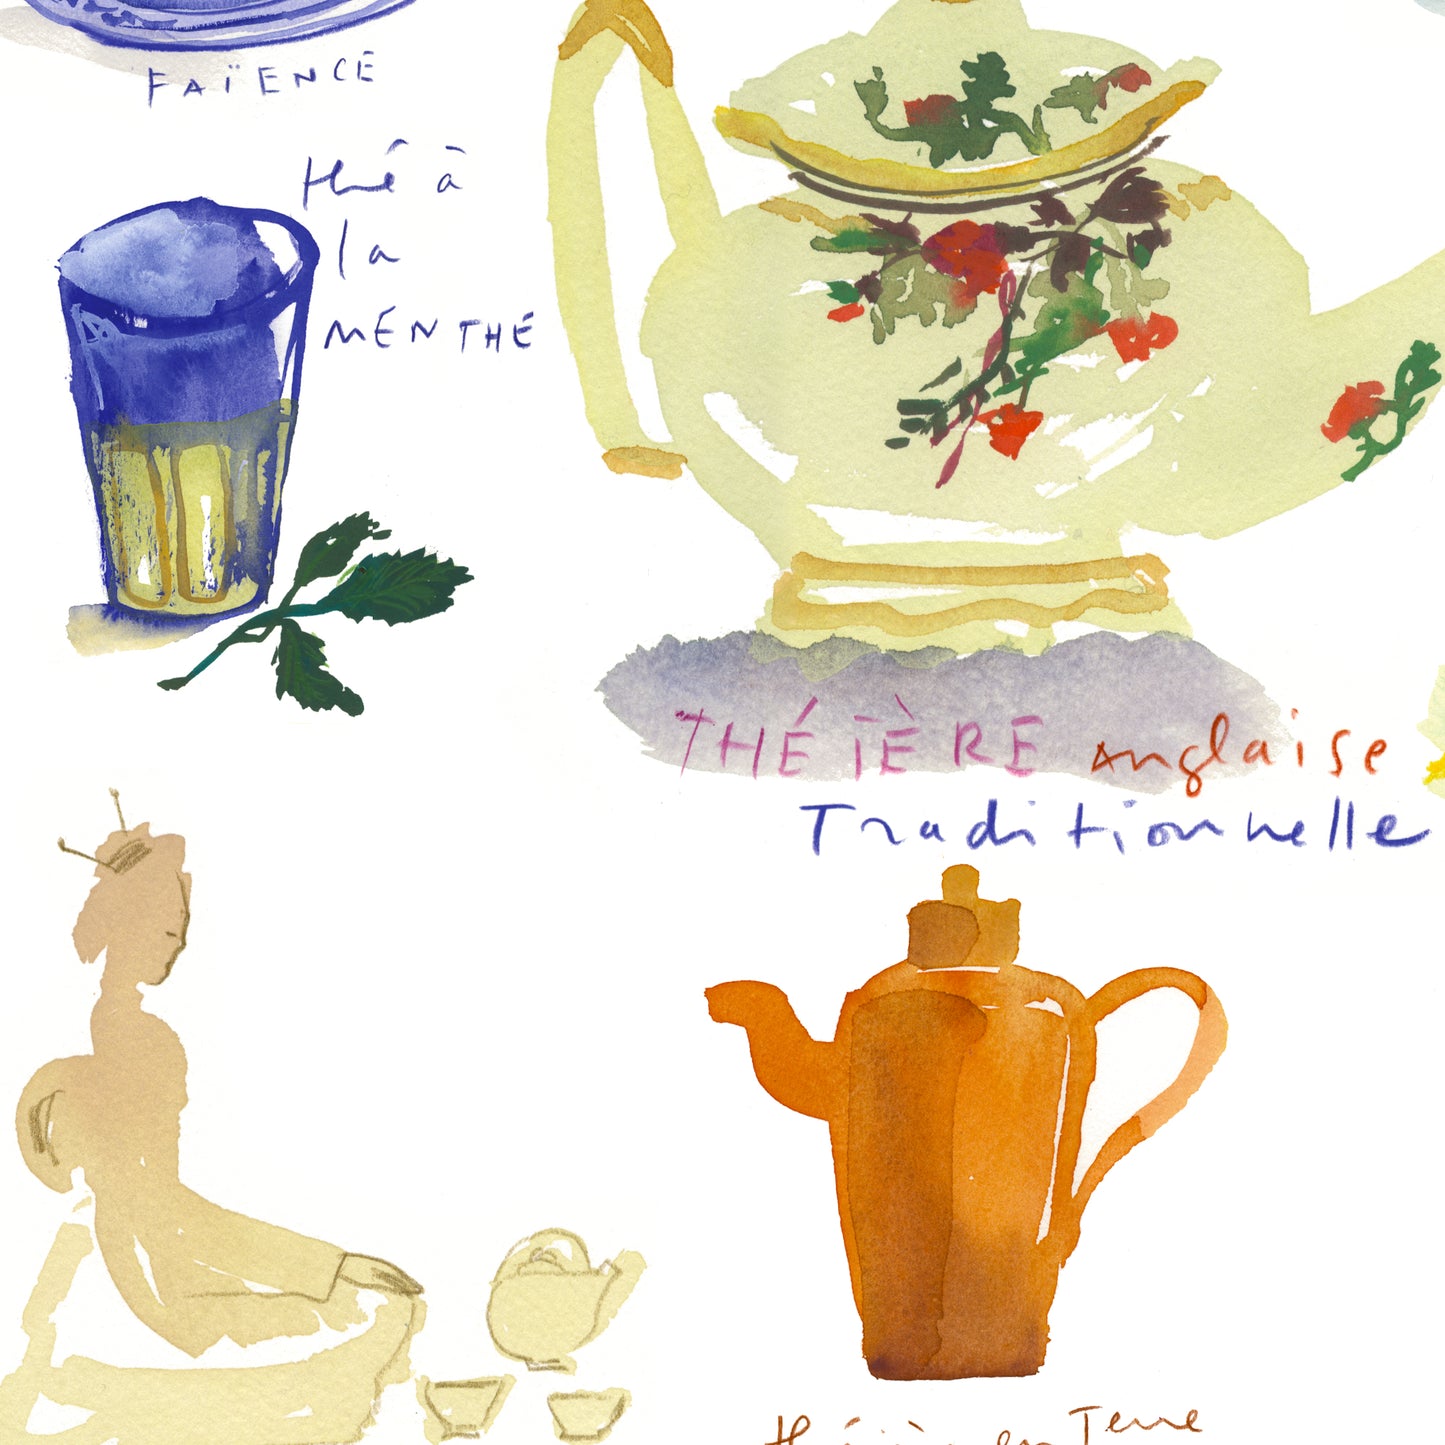 Tea print